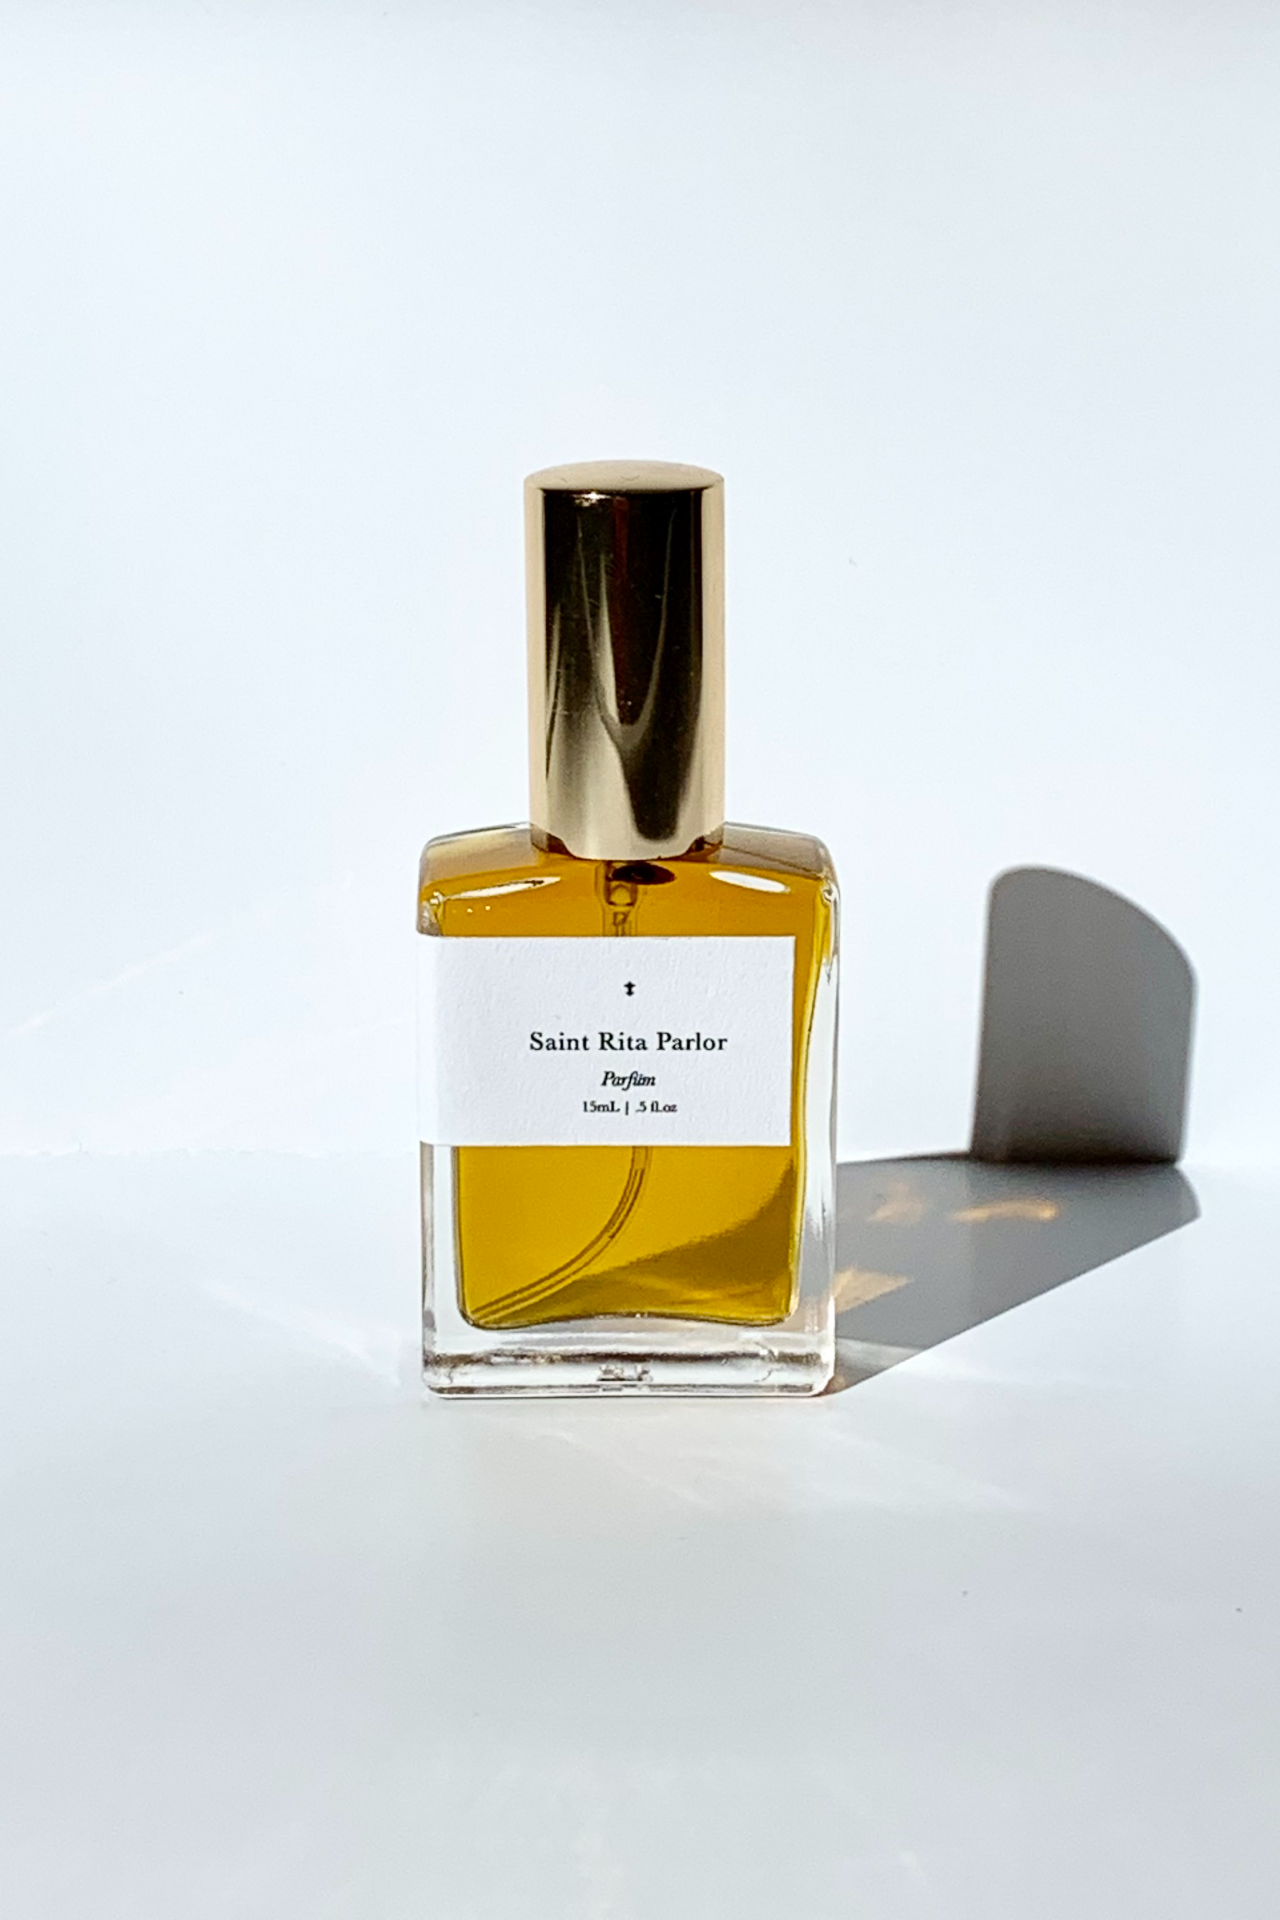 Saint Rita Parlor Signature Parfum